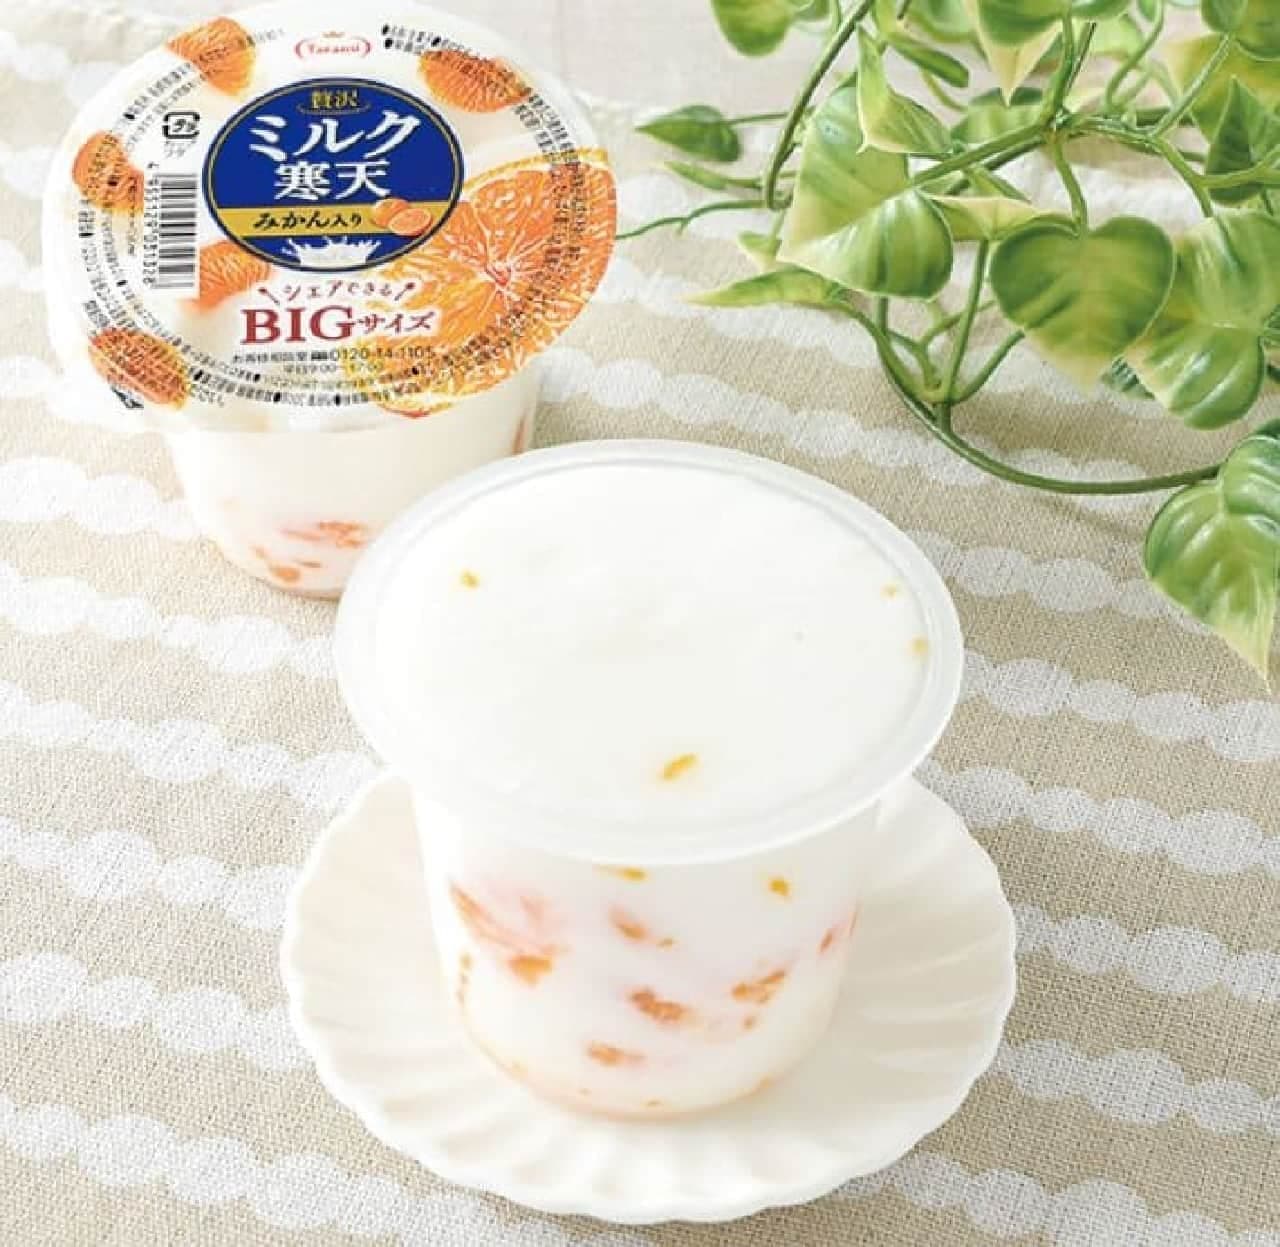 FamilyMart "Luxury Milk Kanten with Mandarin Oranges